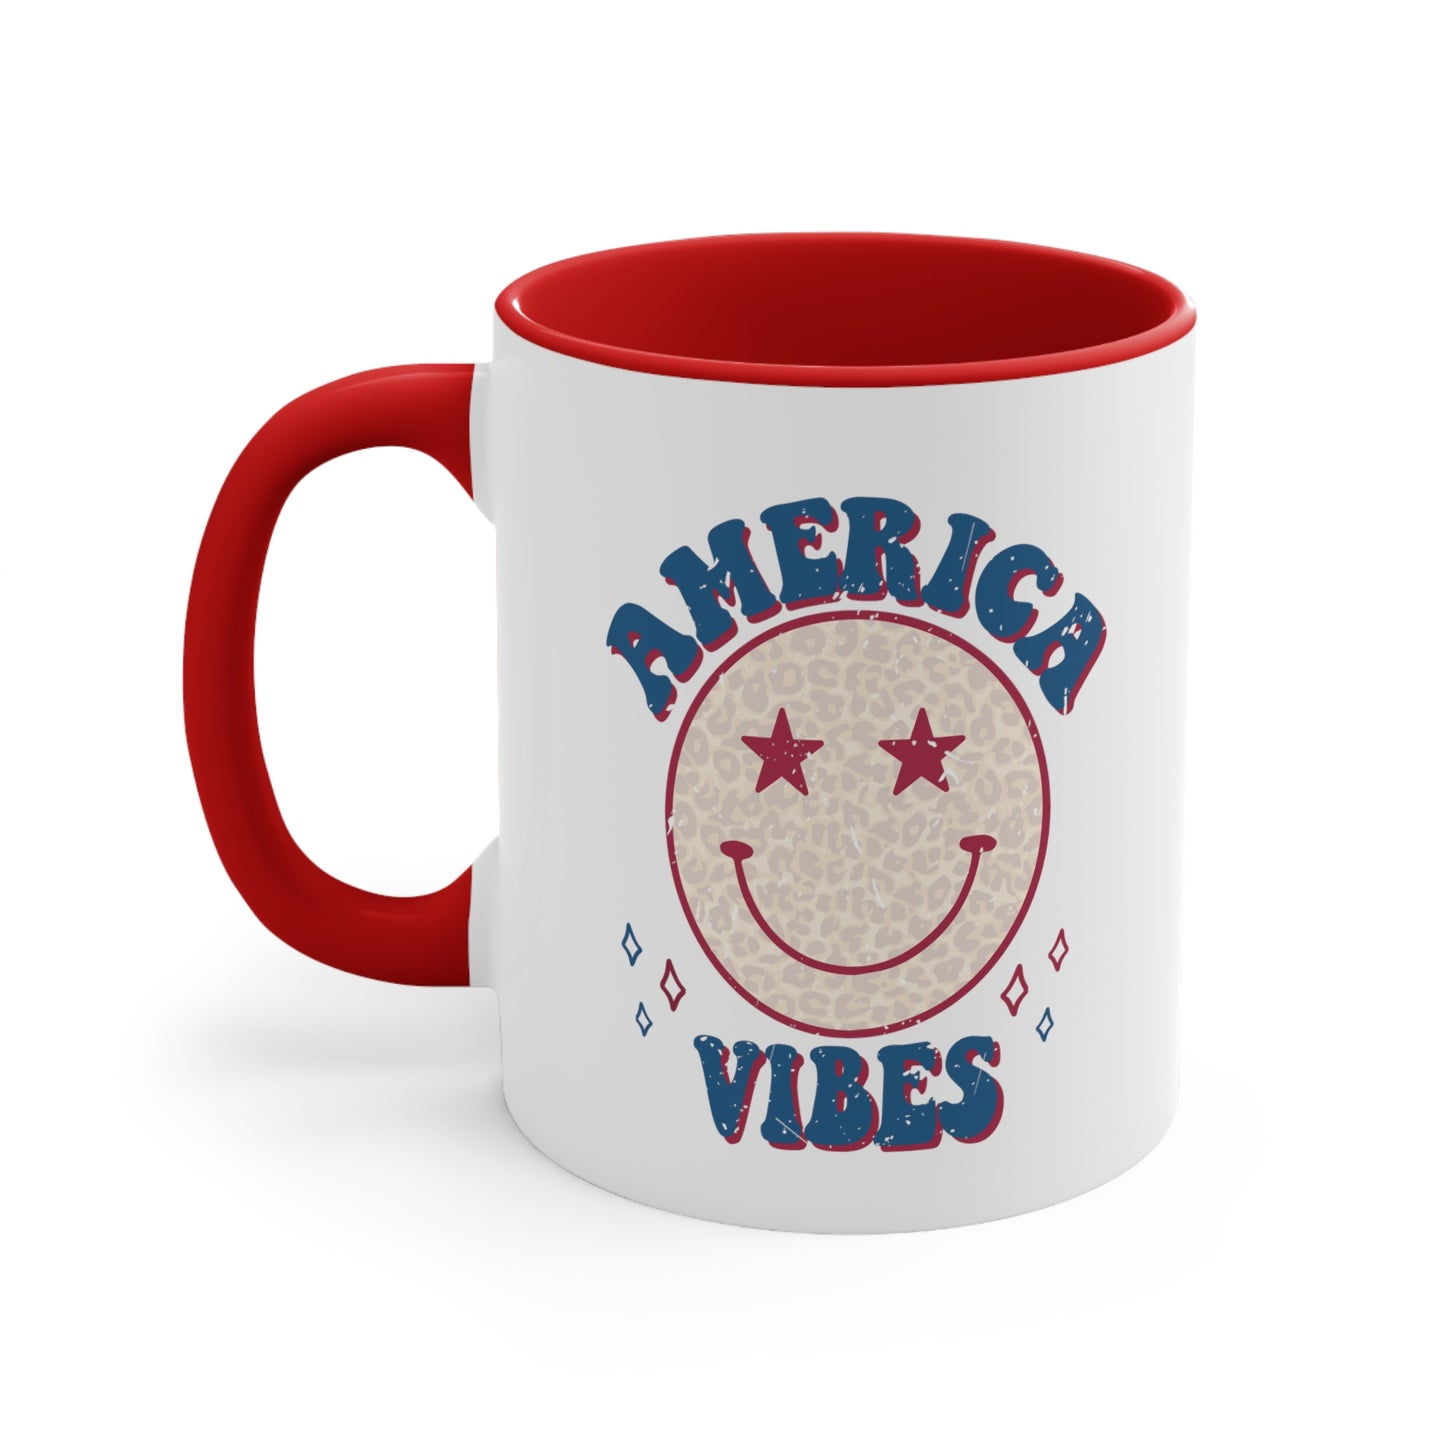 America Vibes Accent Coffee Mug, 11oz